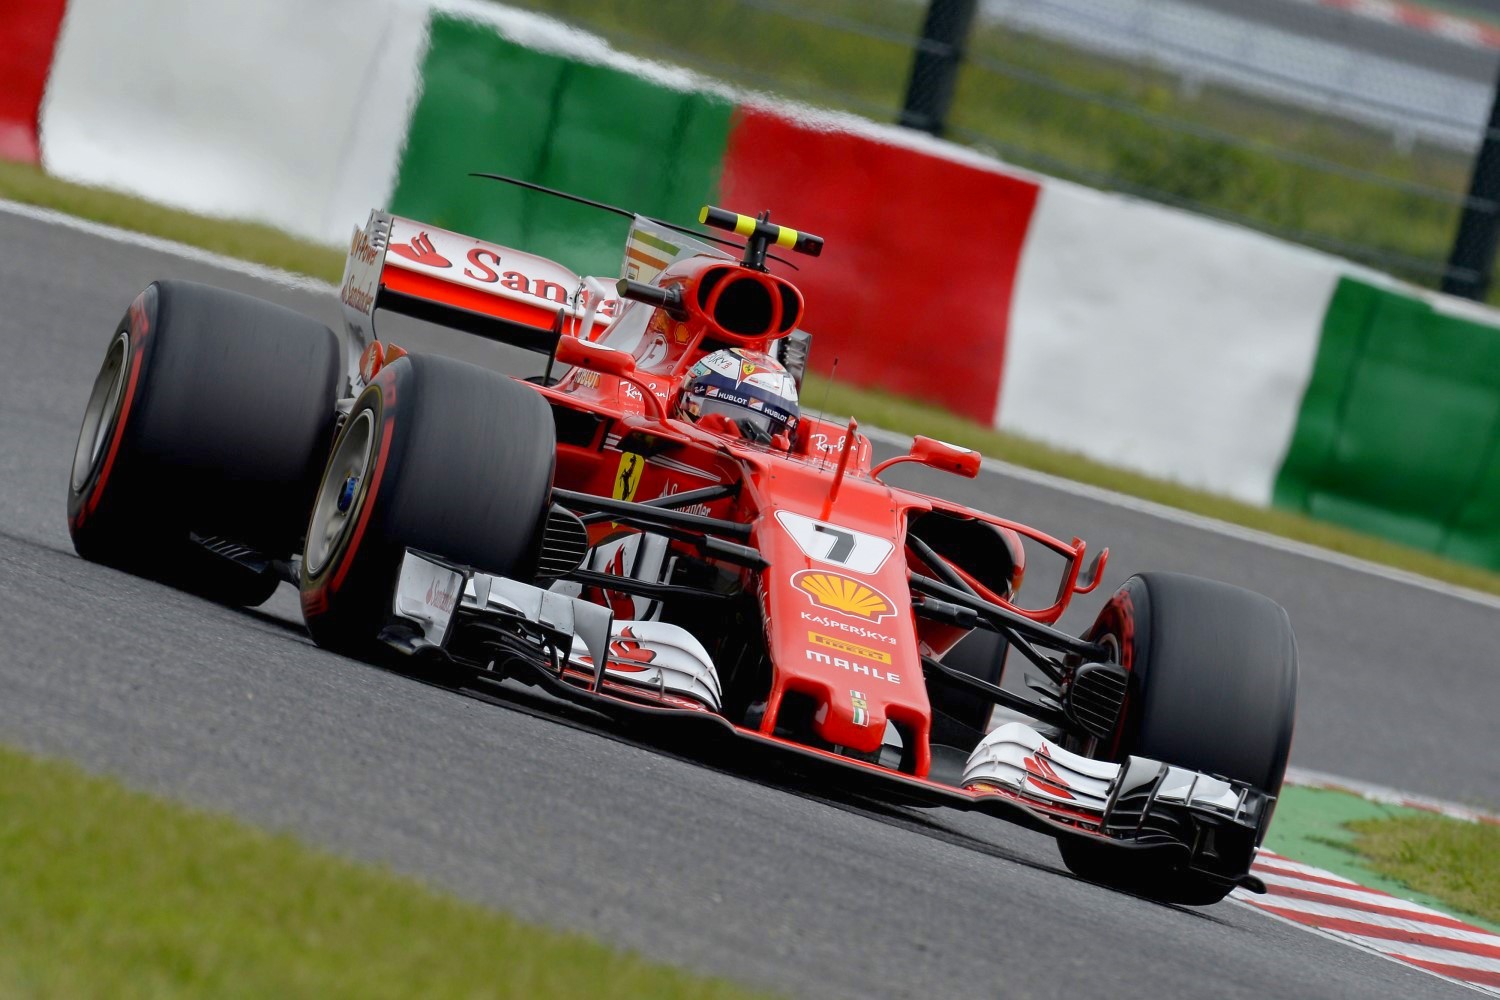 Kimi Raikkonen in the hapless Ferrari